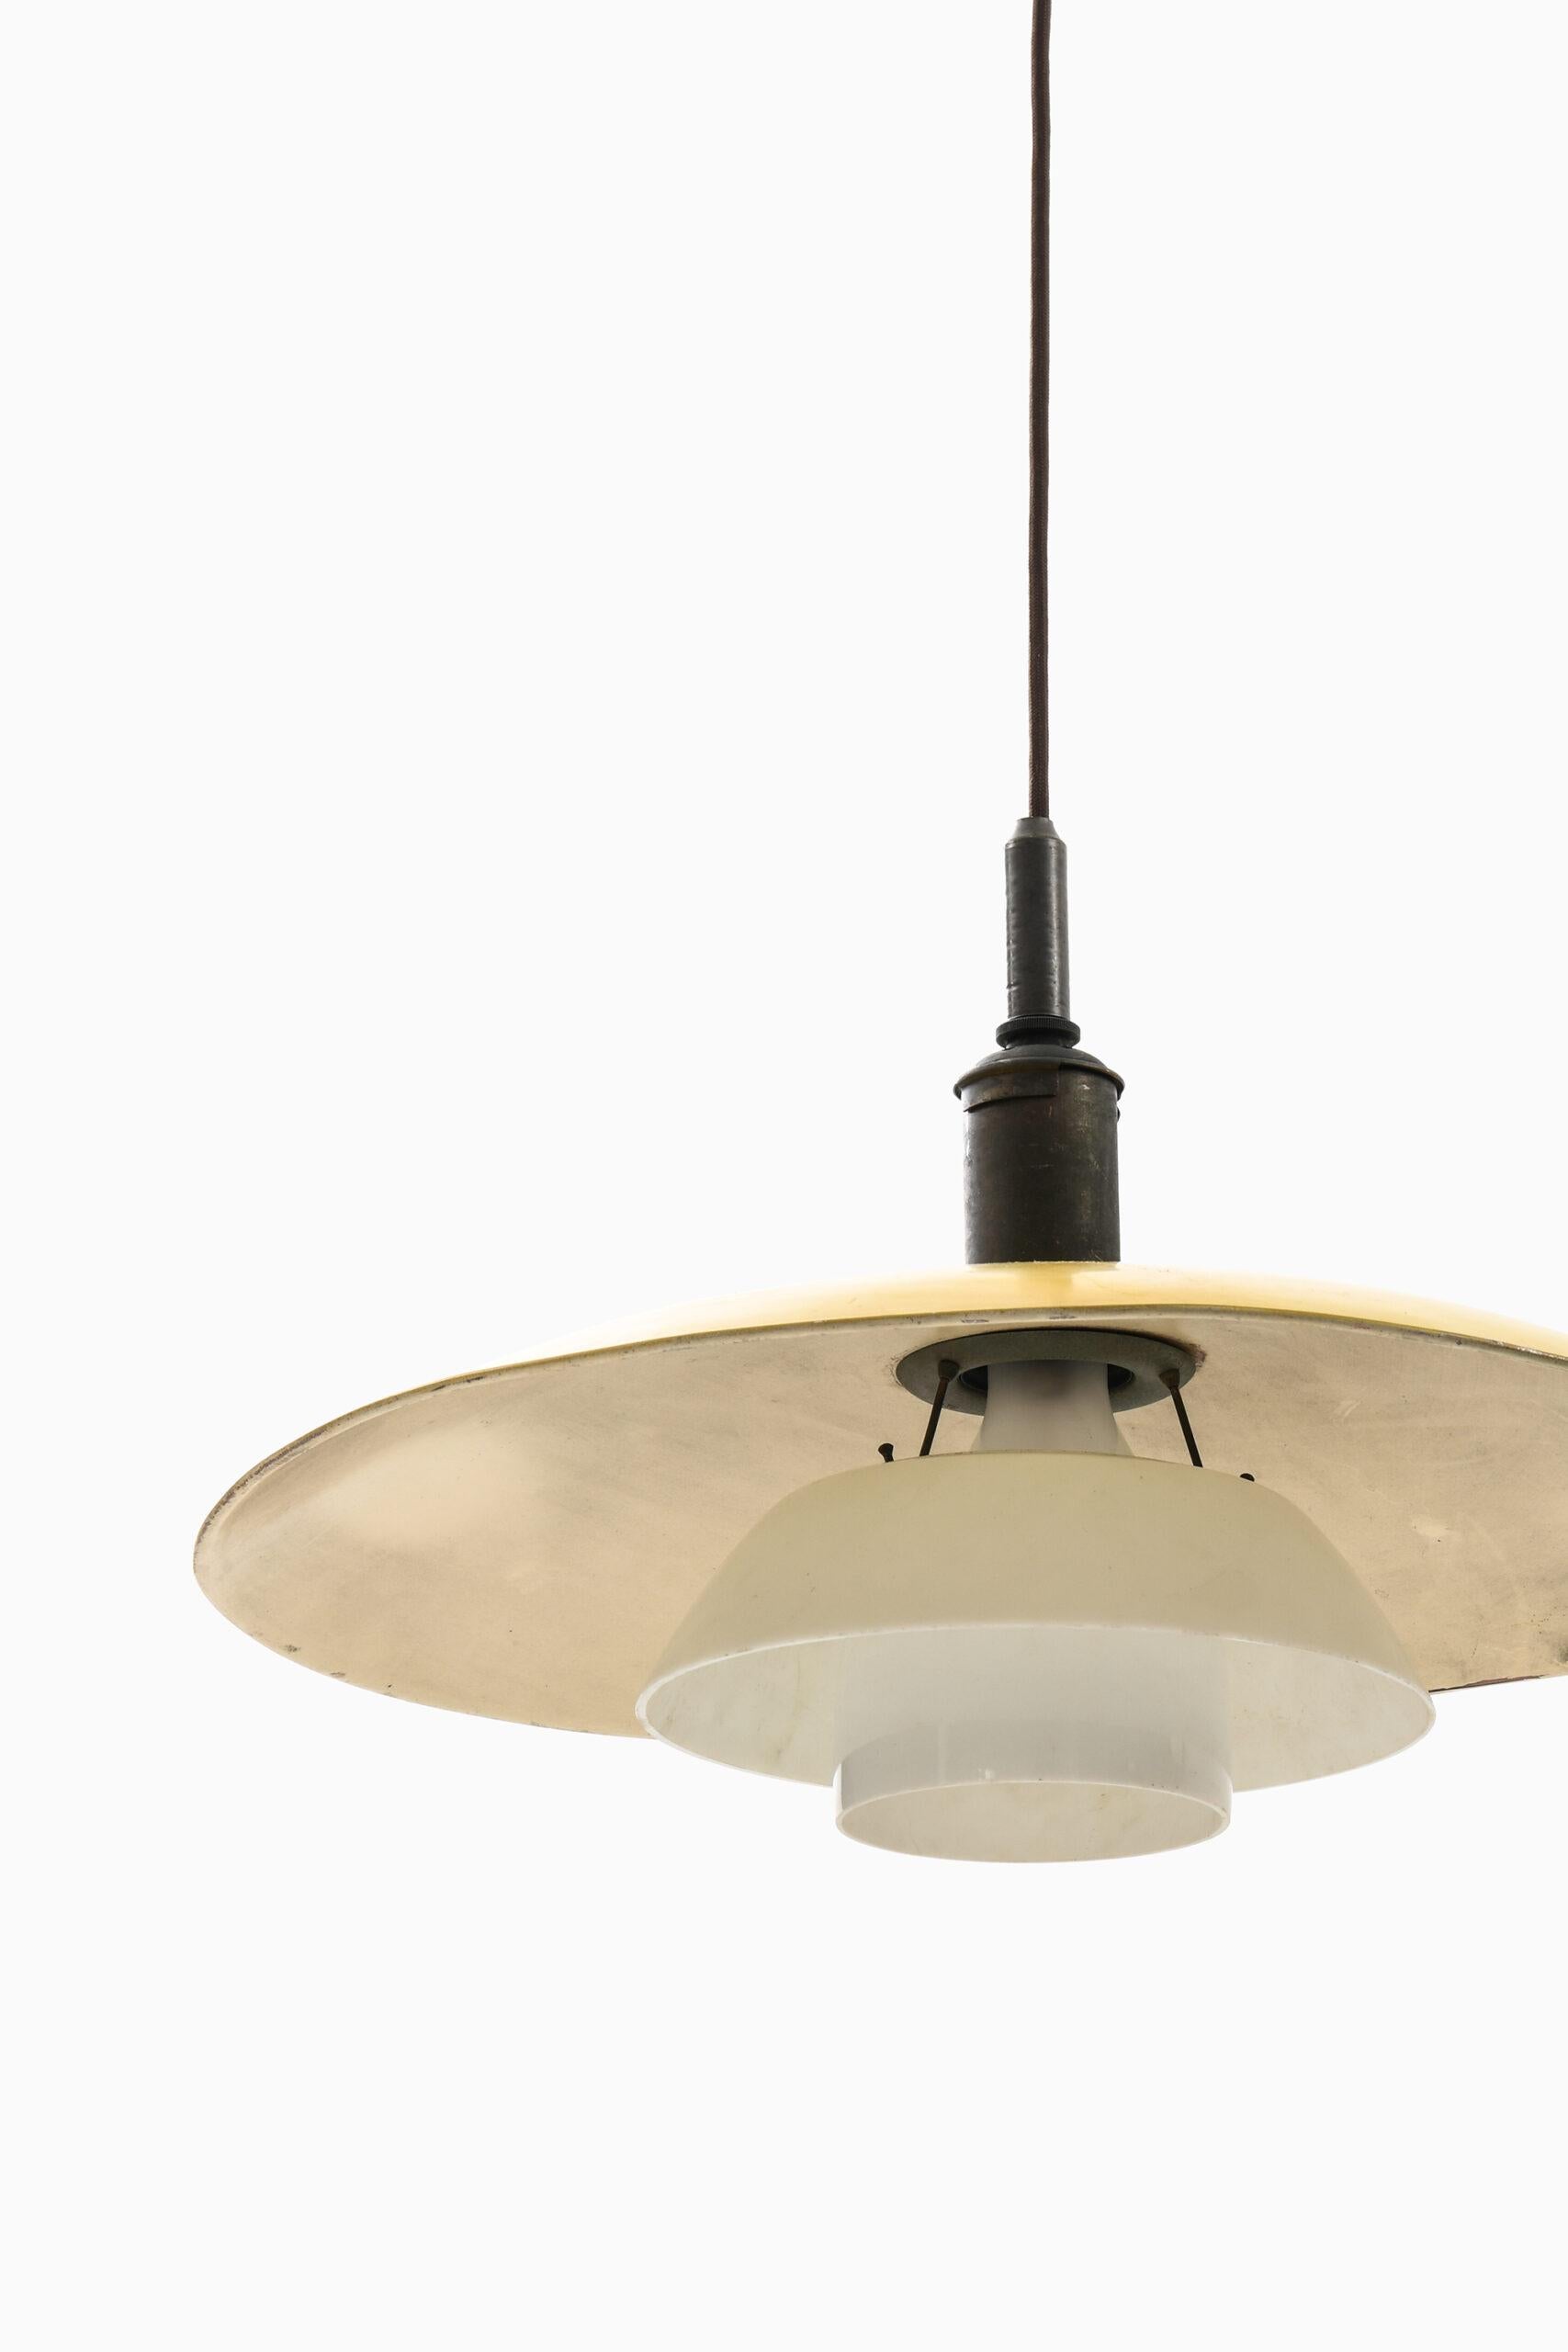 Danish Poul Henningsen Ceiling Lamp PH-5/5 Produced by Louis Poulsen in Denmark For Sale